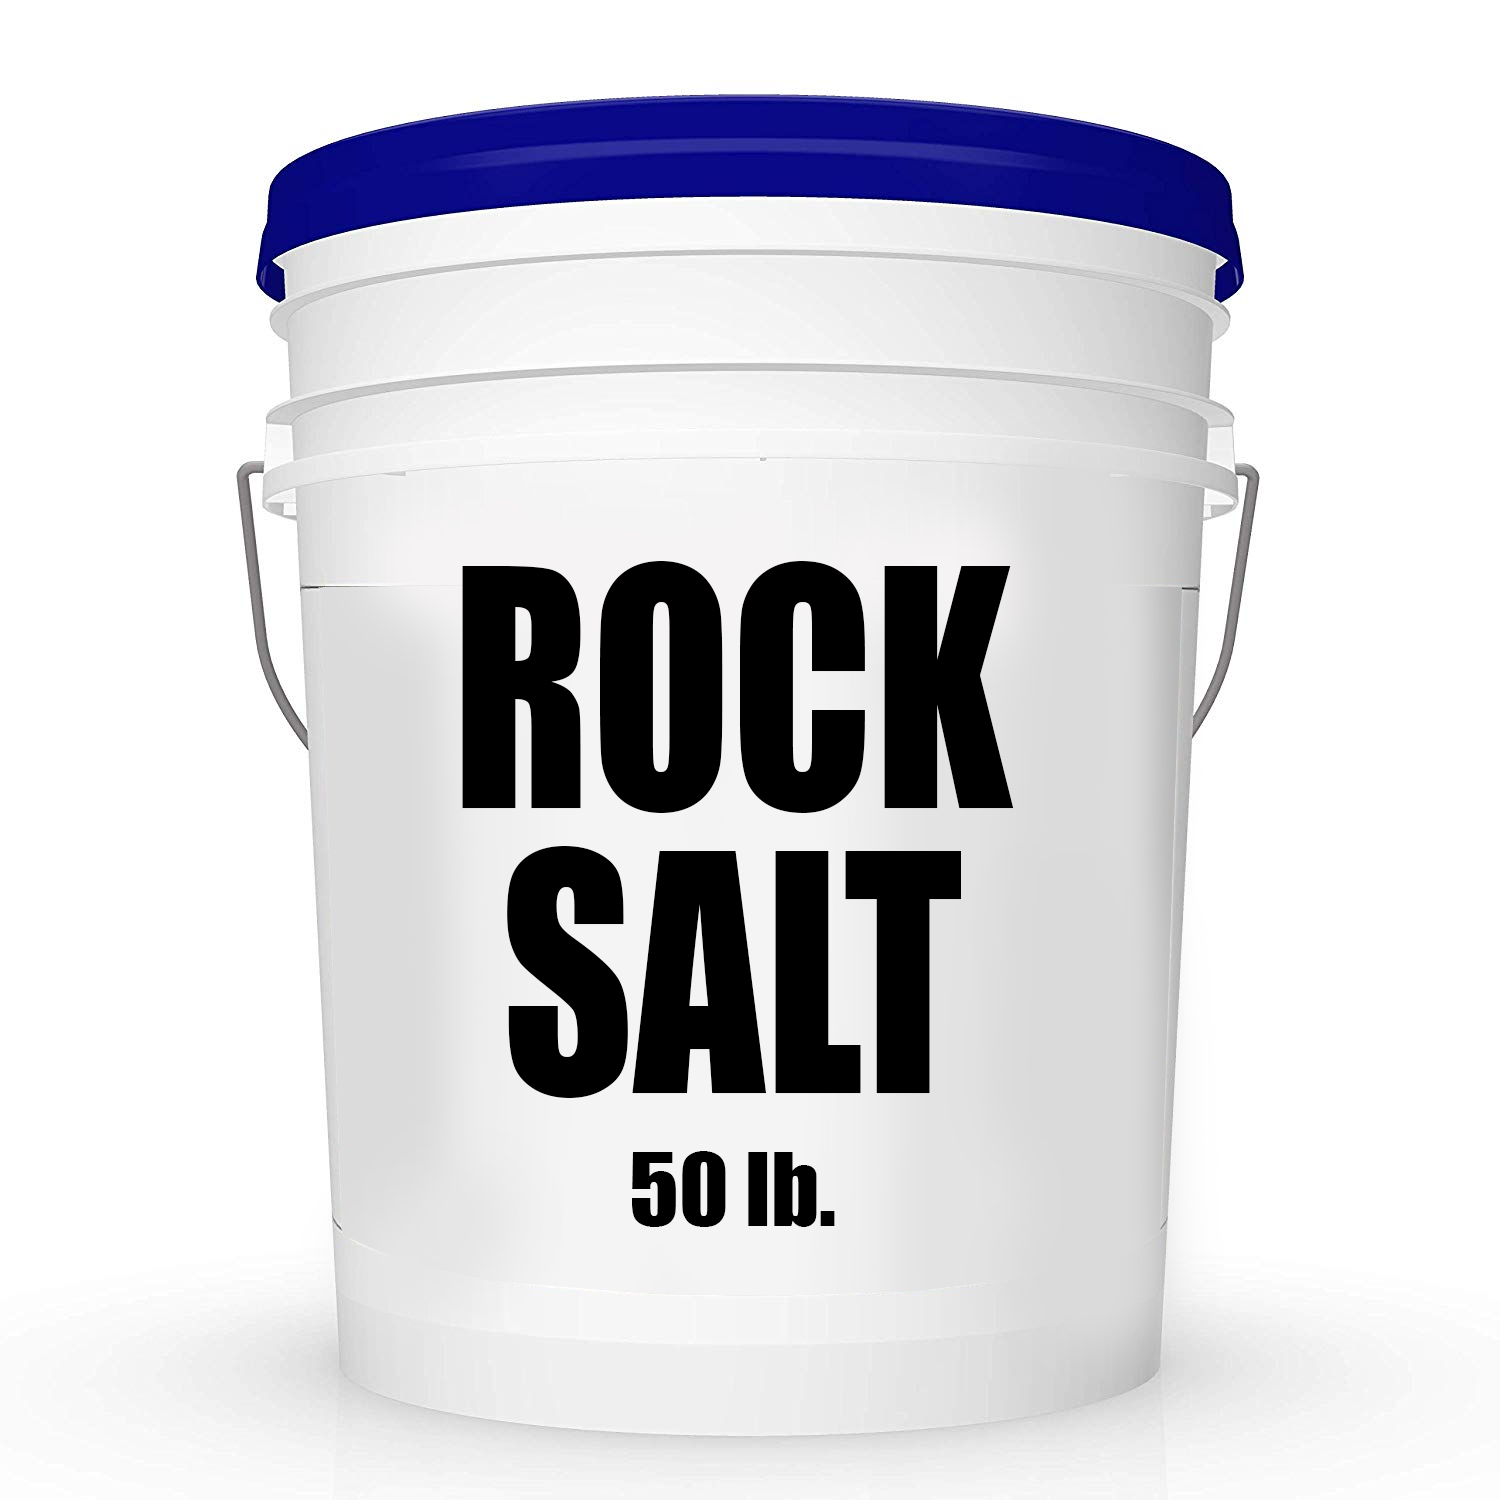 ROCK SALT - DRUM 50 LB.